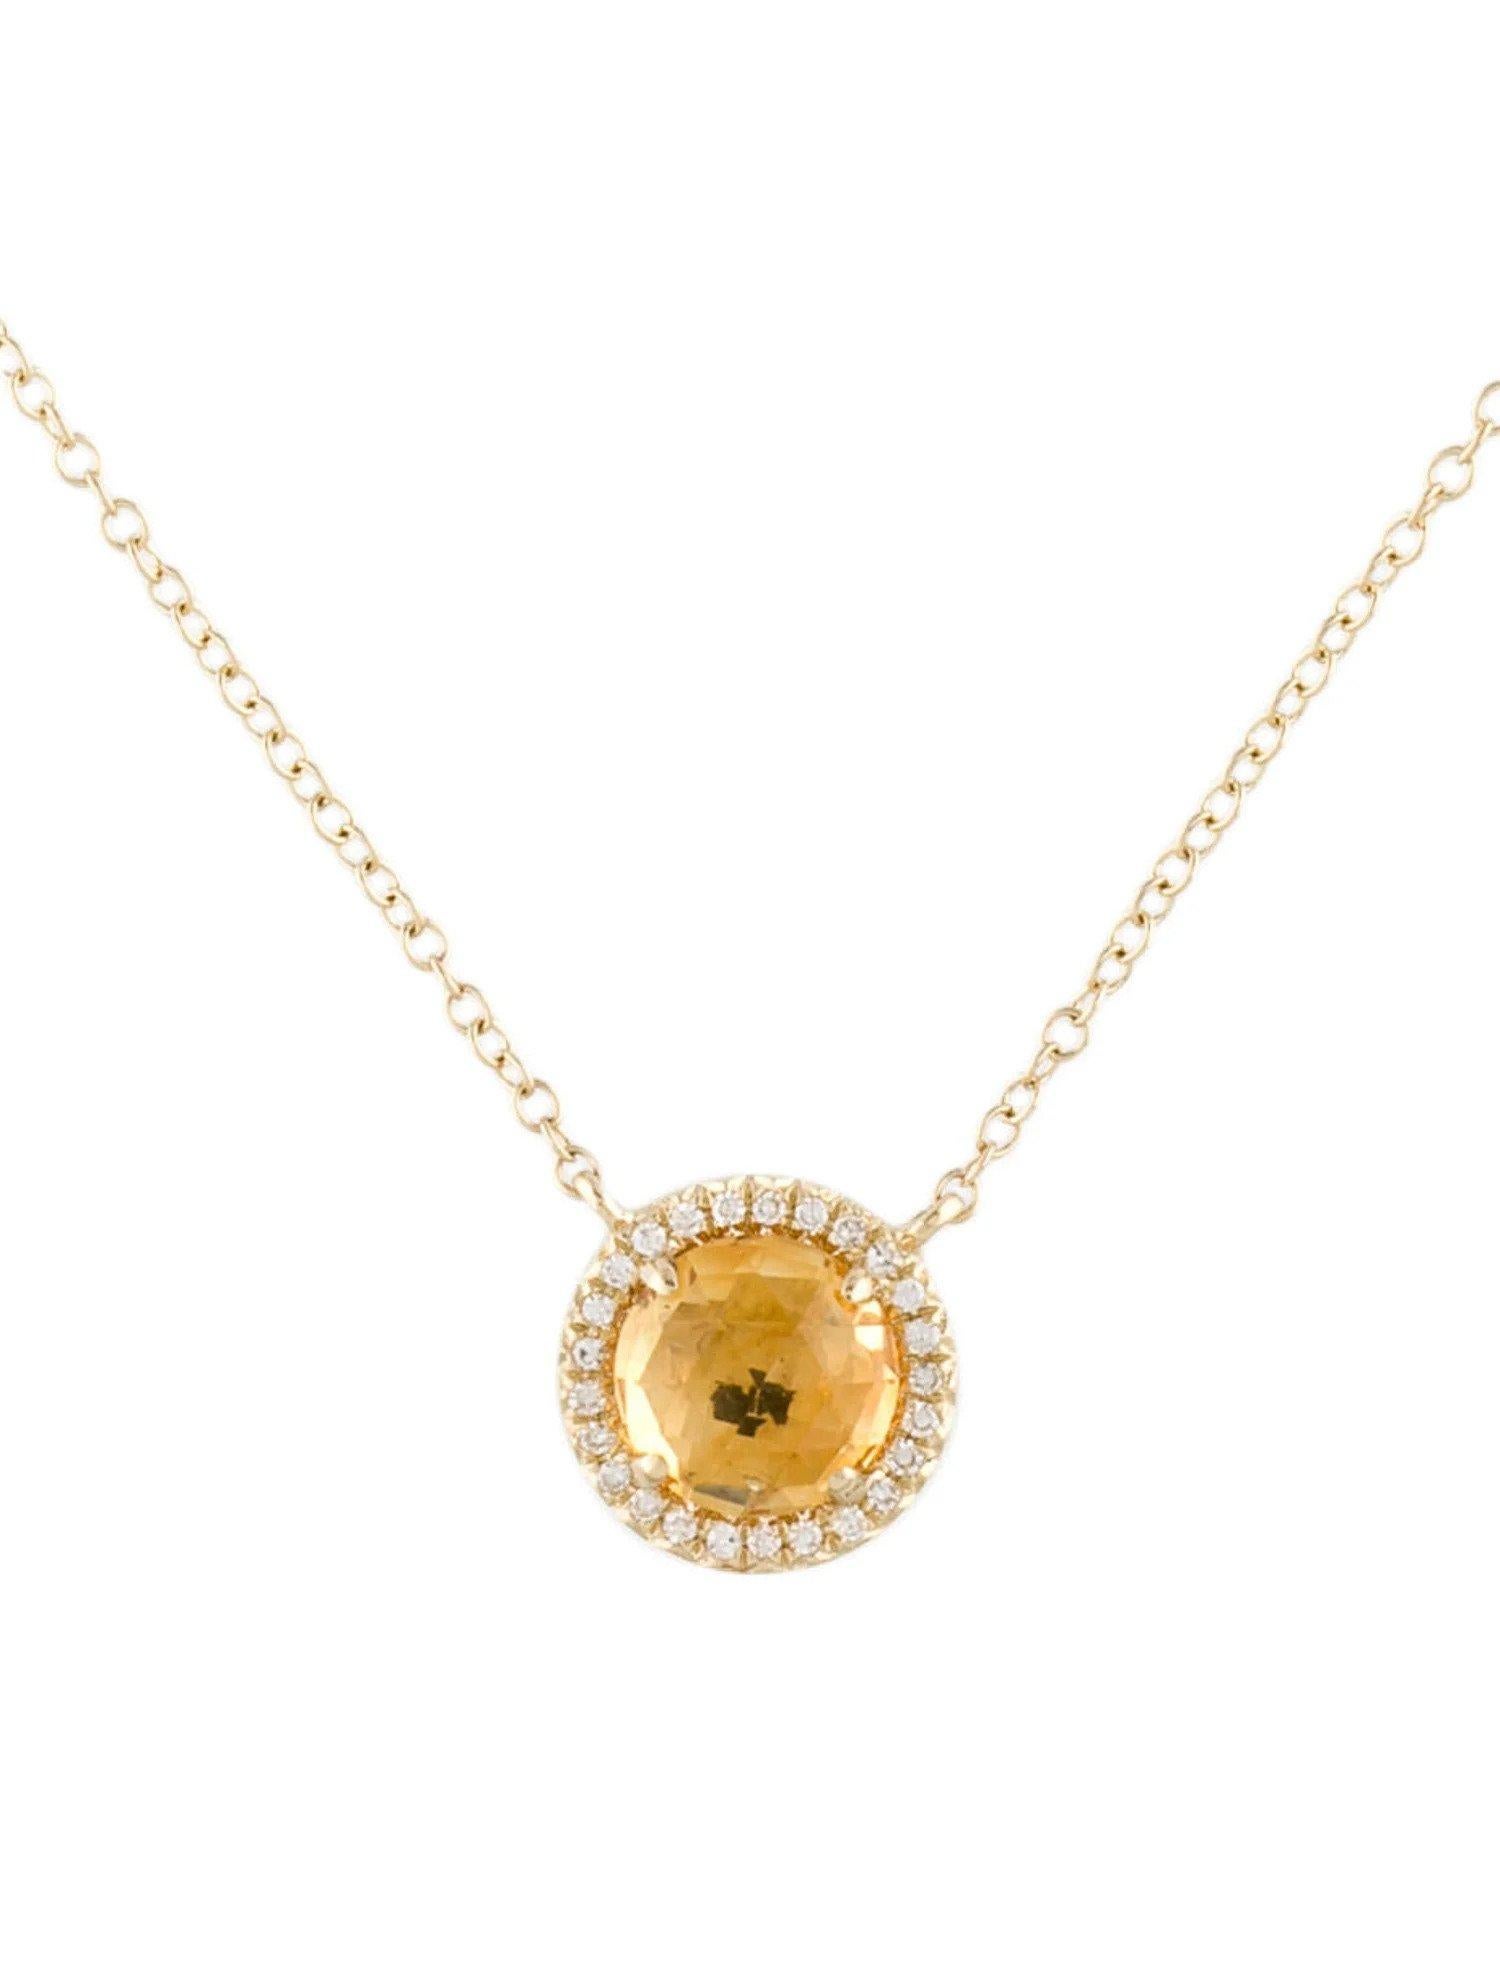 Round Cut 1.41 Carat Round Citrine & Diamond Yellow Gold Pendant Necklace  For Sale